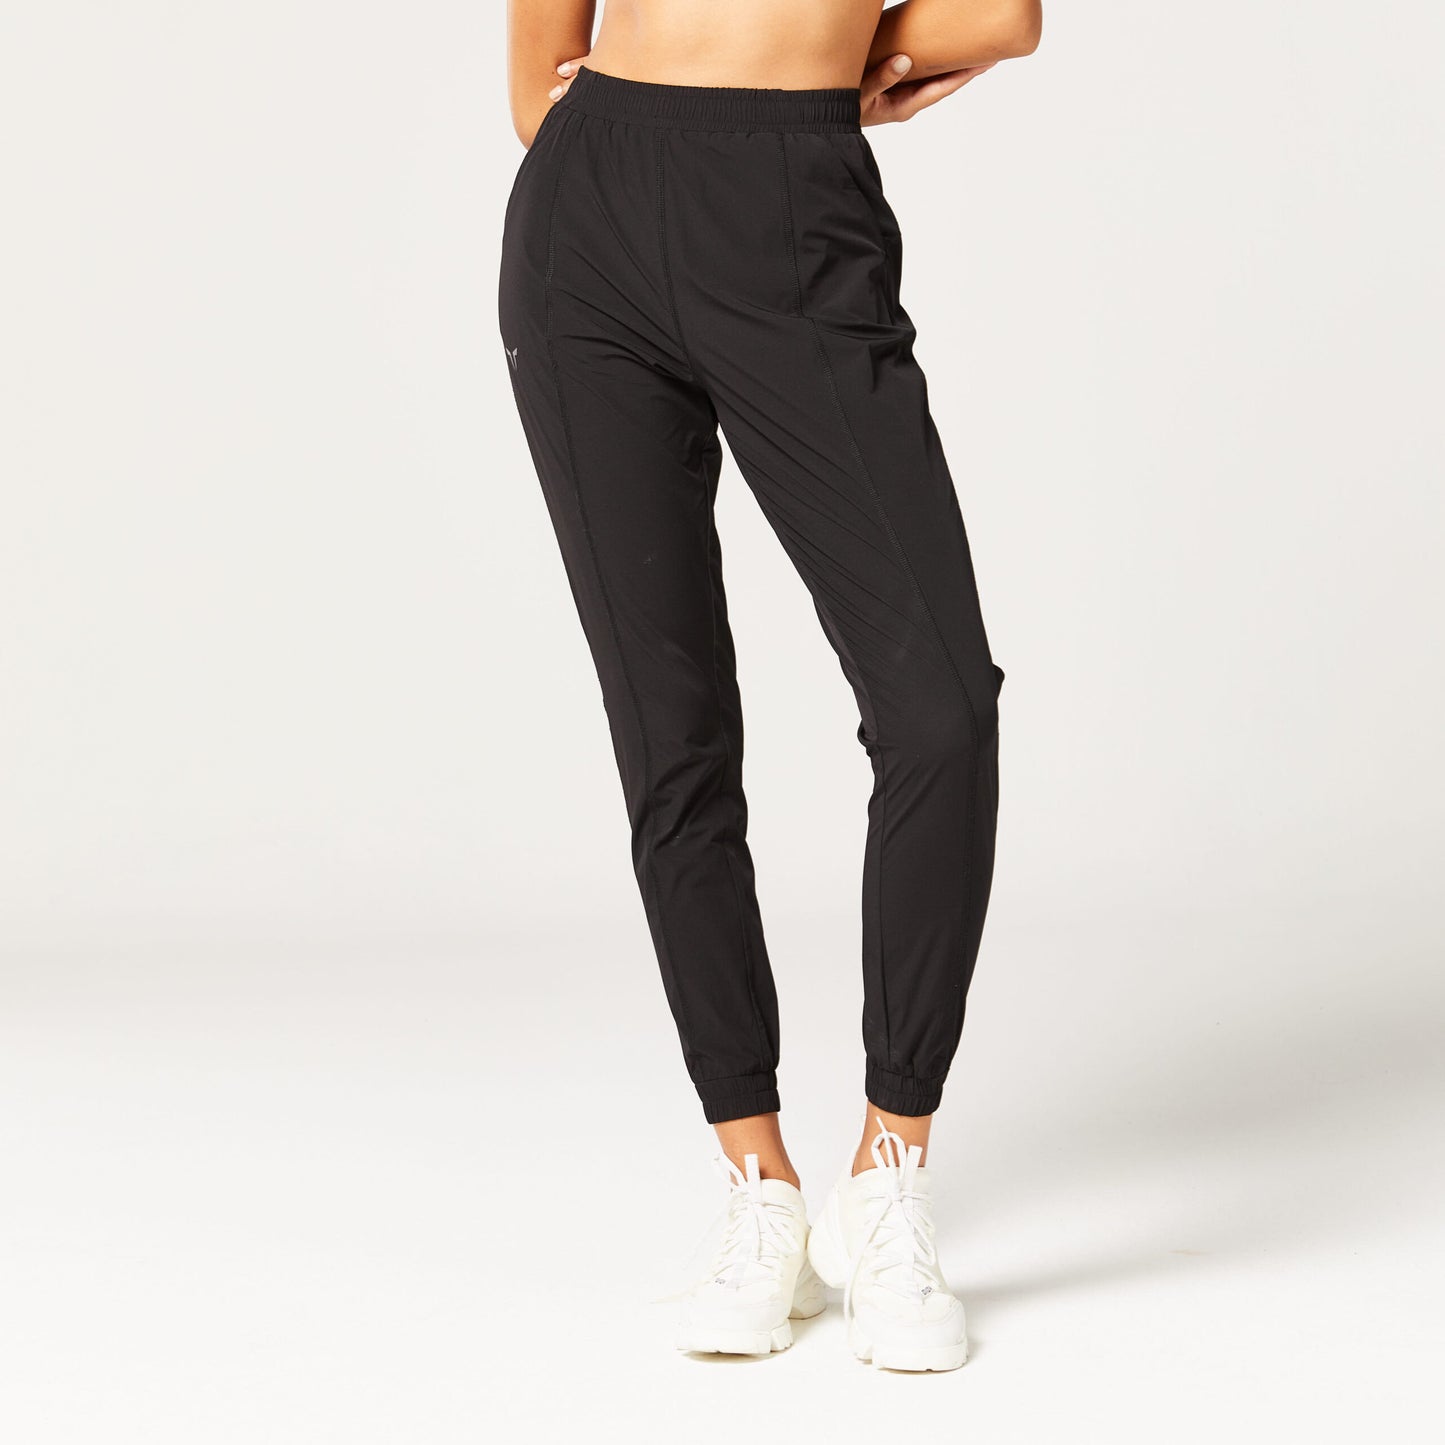 squatwolf-workout-clothes-code-versatile-track-joggers-black-gym-pants-for-women